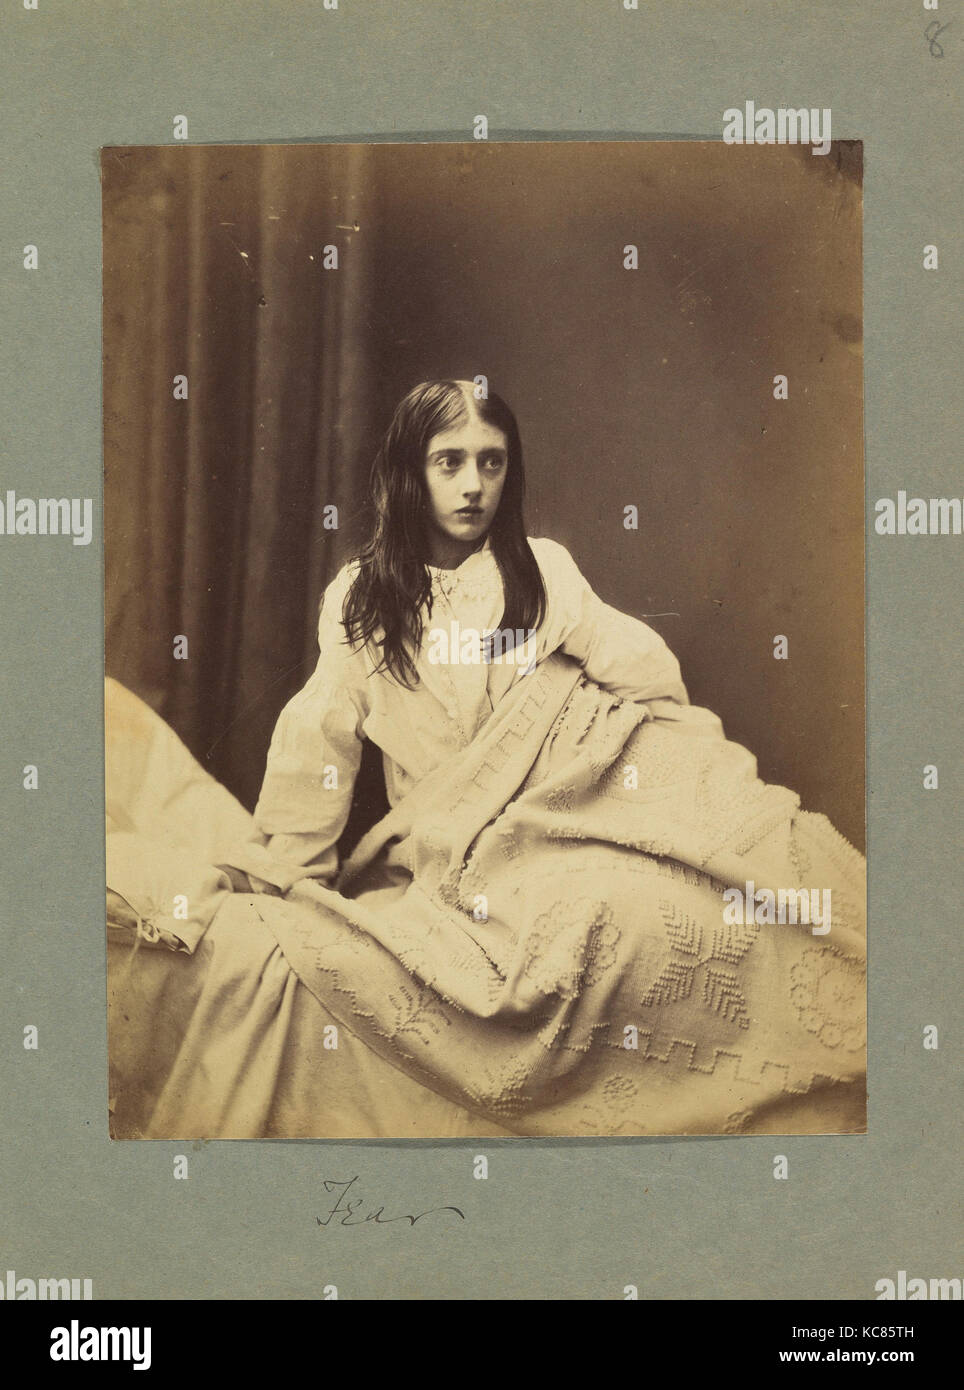 Fear, ca. 1860, Albumen silver print, Image: 7 15/16 × 6 1/16 in. (20.2 × 15.4 cm), Photographs, Henry Peach Robinson (British Stock Photo